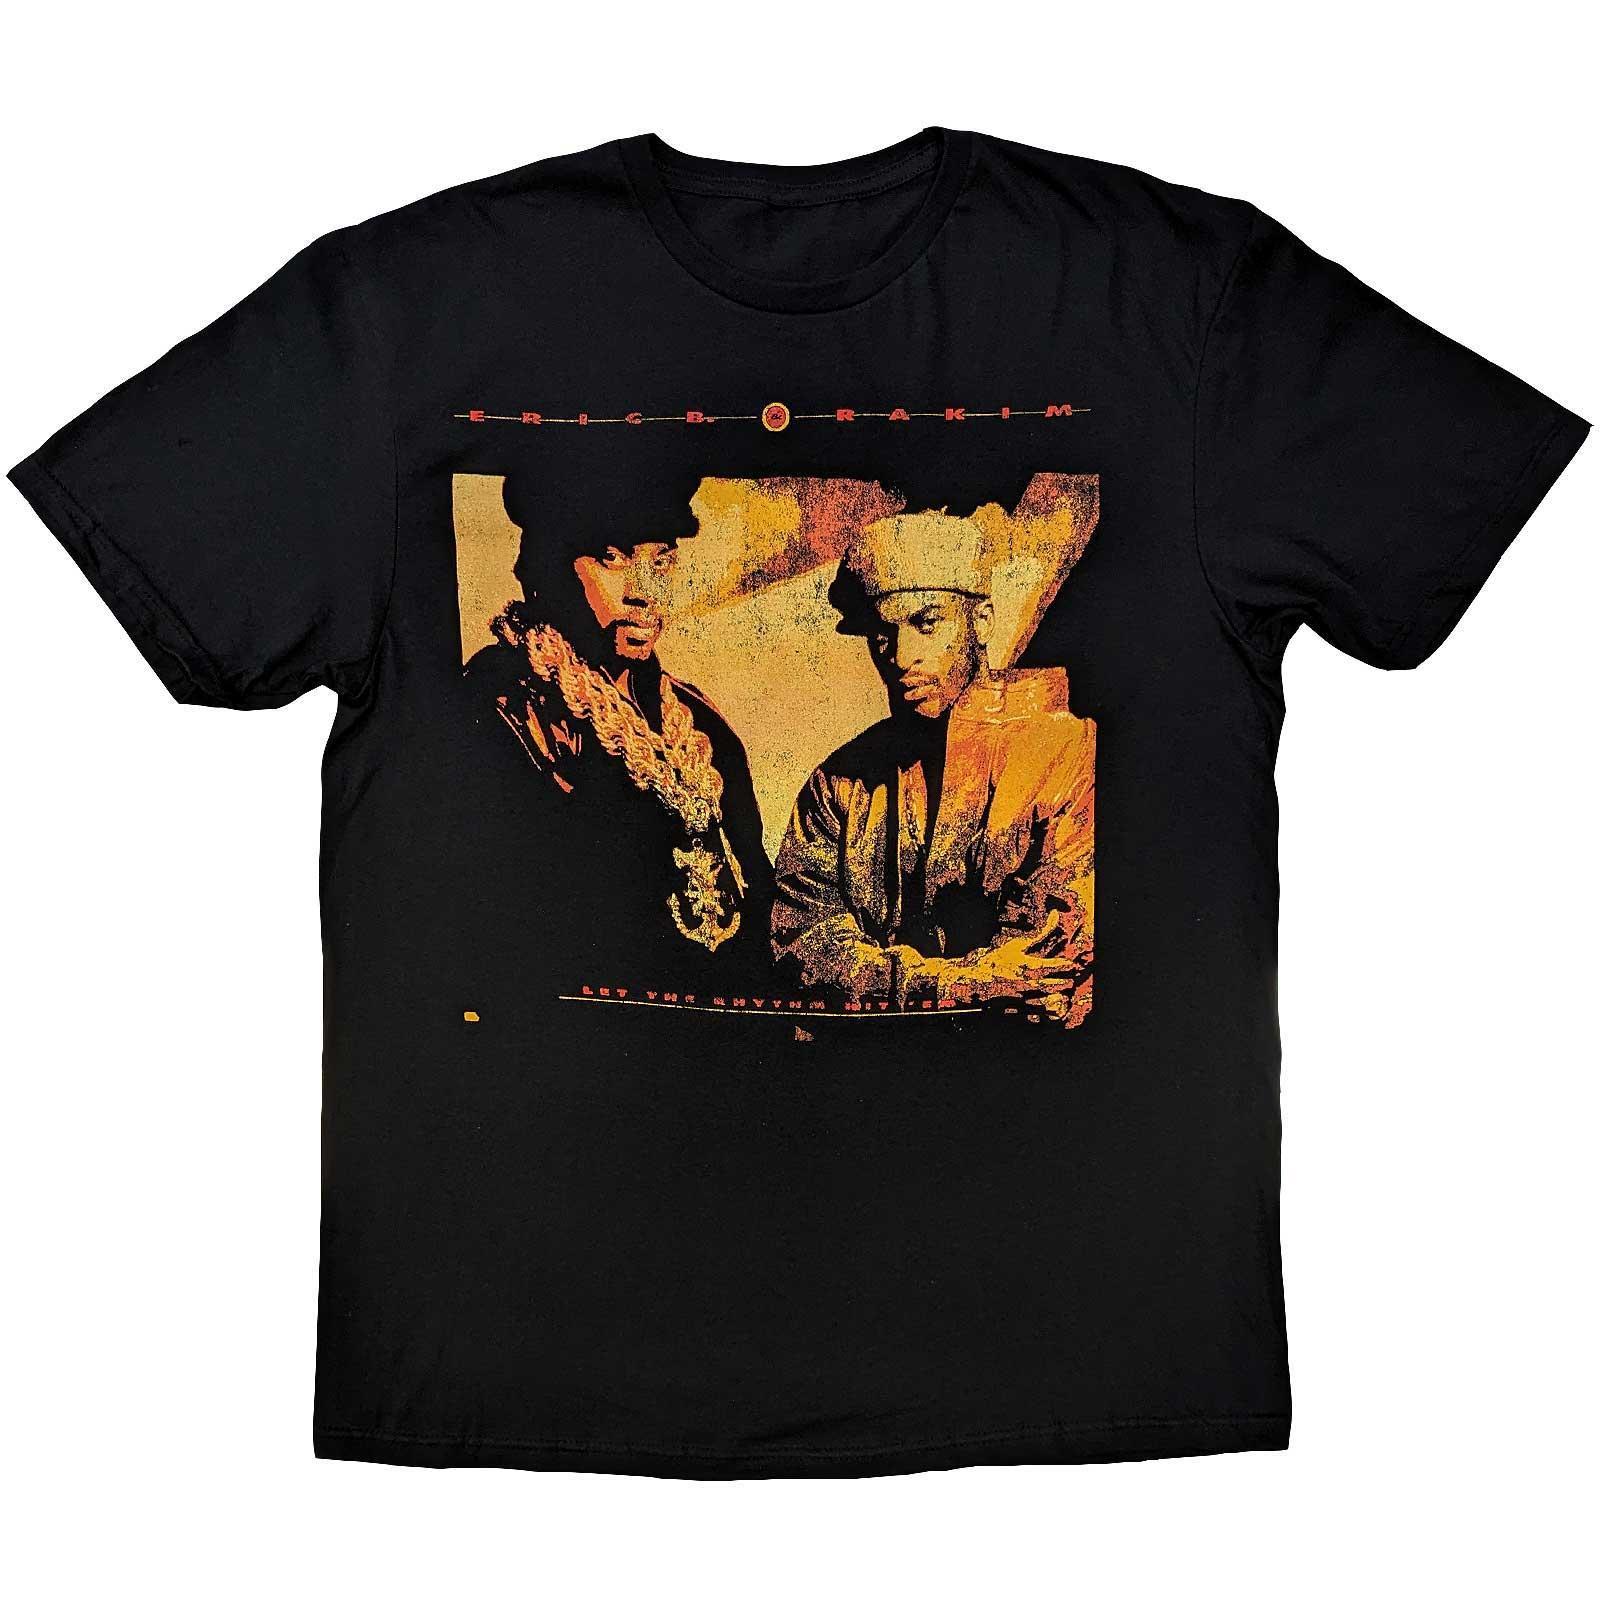 Eric B. & Rakim Unisex Adult Let The Rhythm Begin Back Print Cotton T-Shirt (Black) (L)